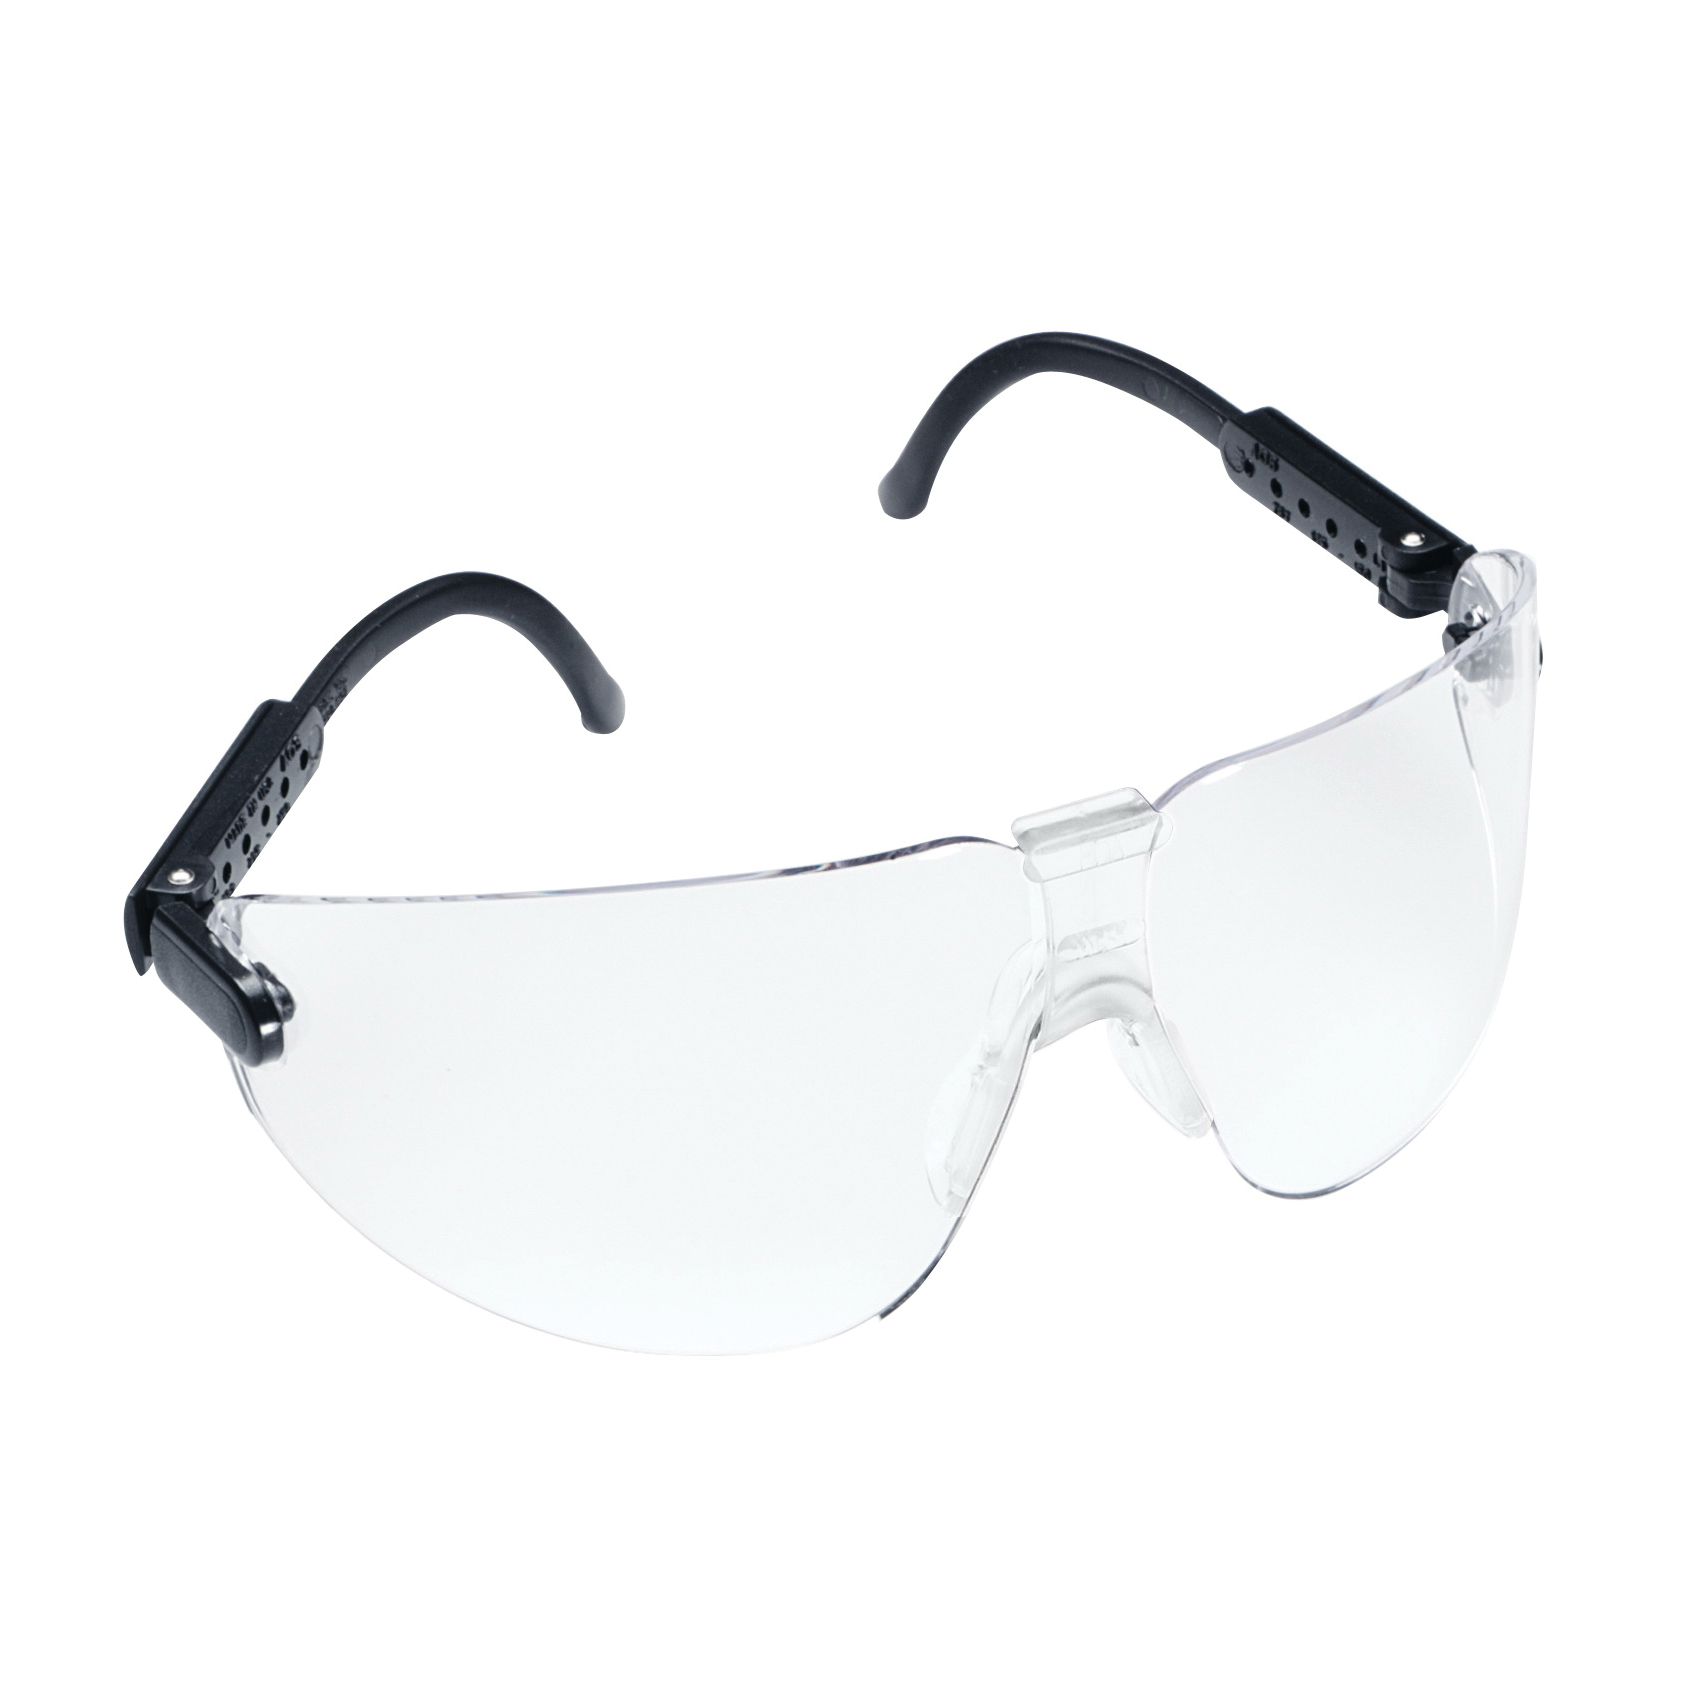 3M™ Lexa™ 078371-62250 Reader Protective Eyewear, Anti-Fog/Anti-Scratch, Clear Lens, Frameless Frame, Black, Plastic Frame, Polycarbonate Lens, ANSI Z87.1-2003, CSA Z94.3-2007